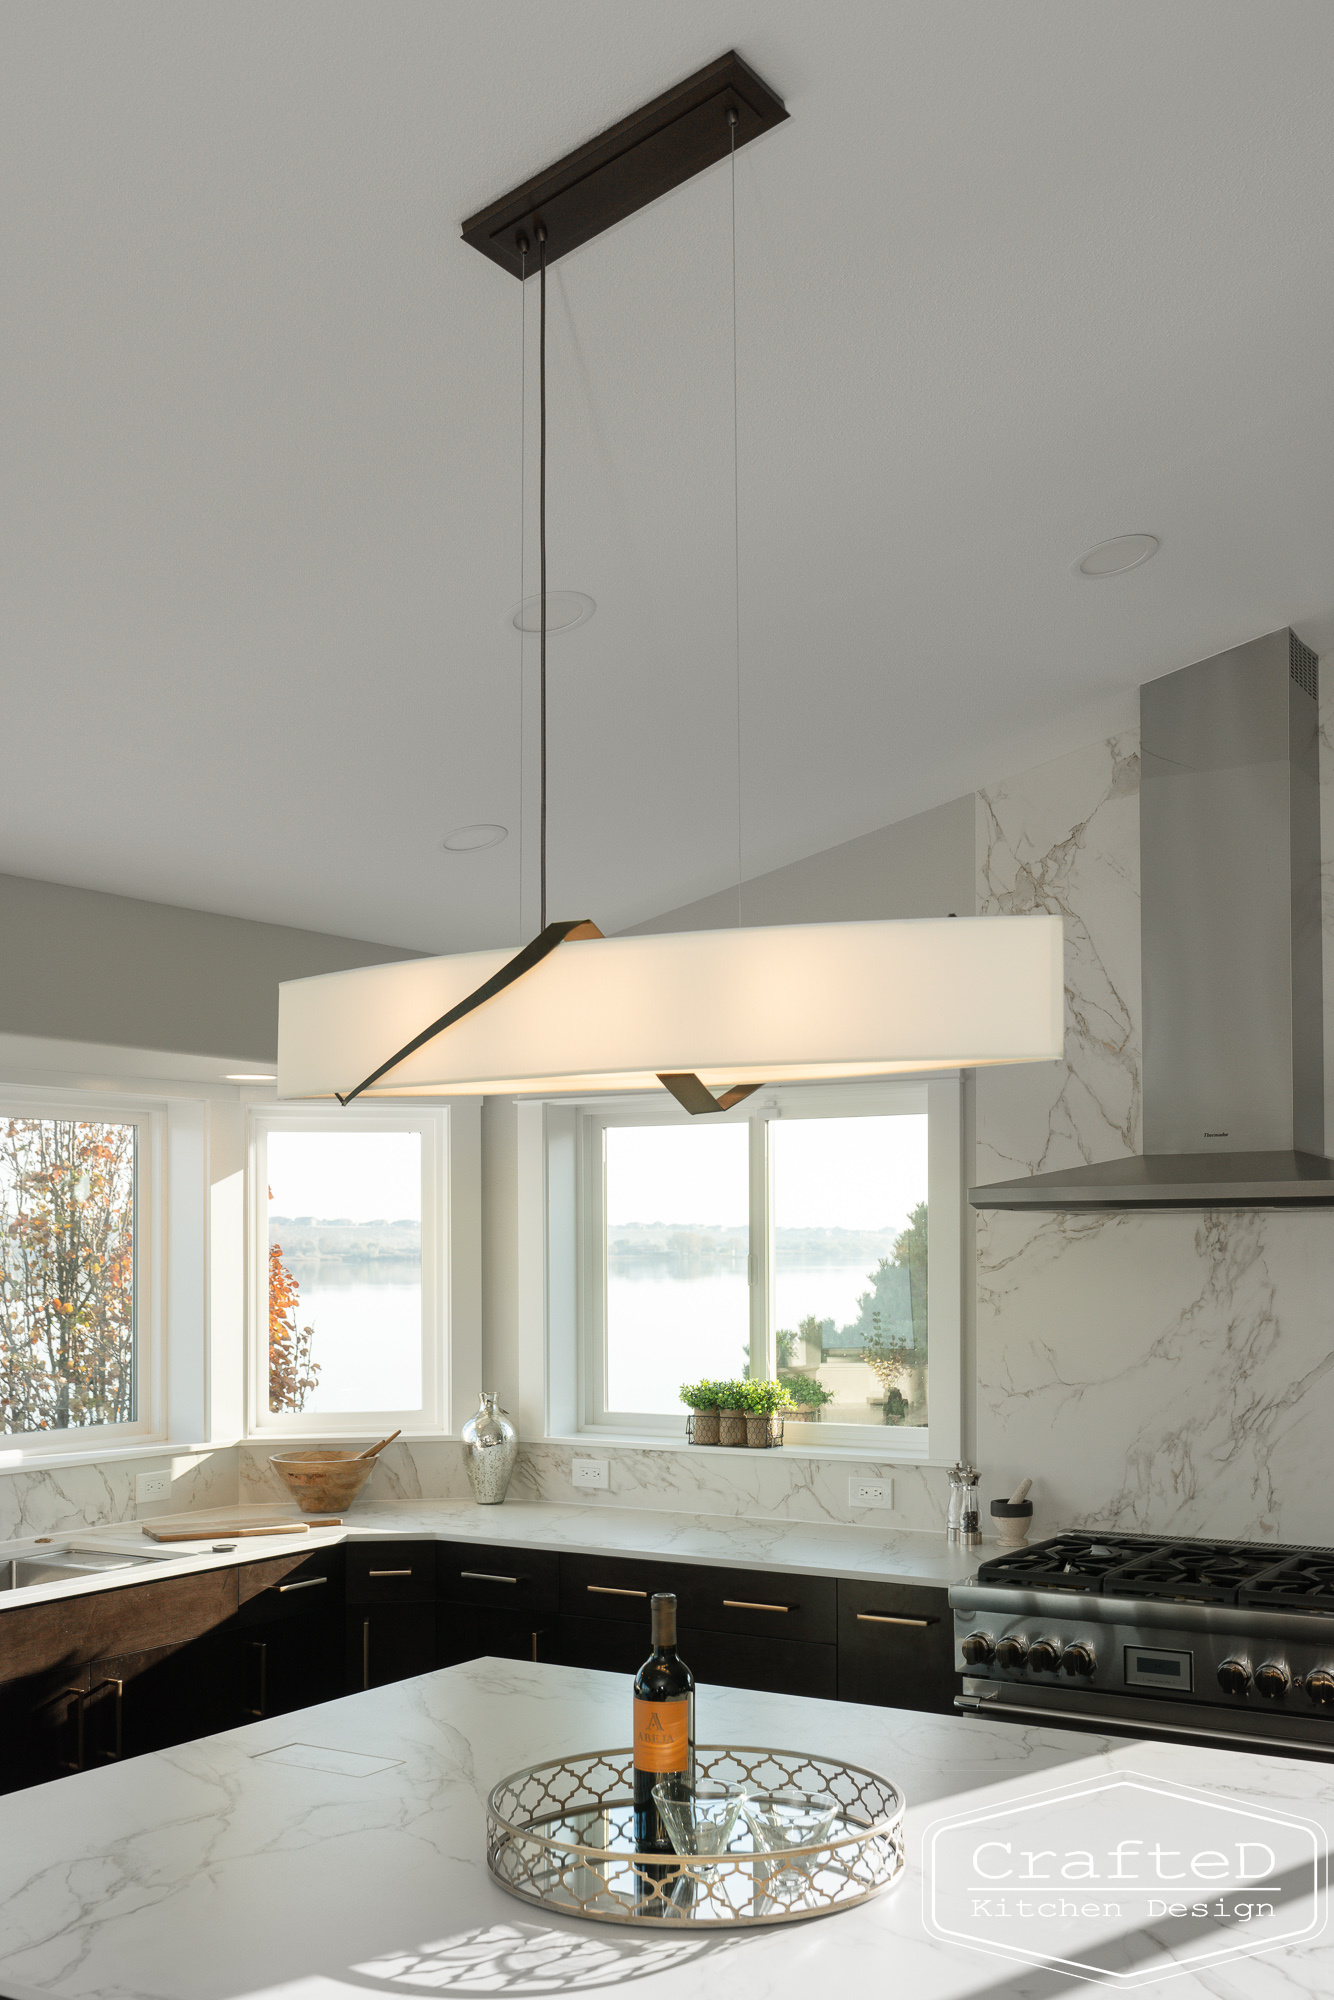 modern metropolitan kitchen design with dark toned wood cabinets, dekton marble backsplash and gold accents in spokane Coeur d'alene moses lake home renovation